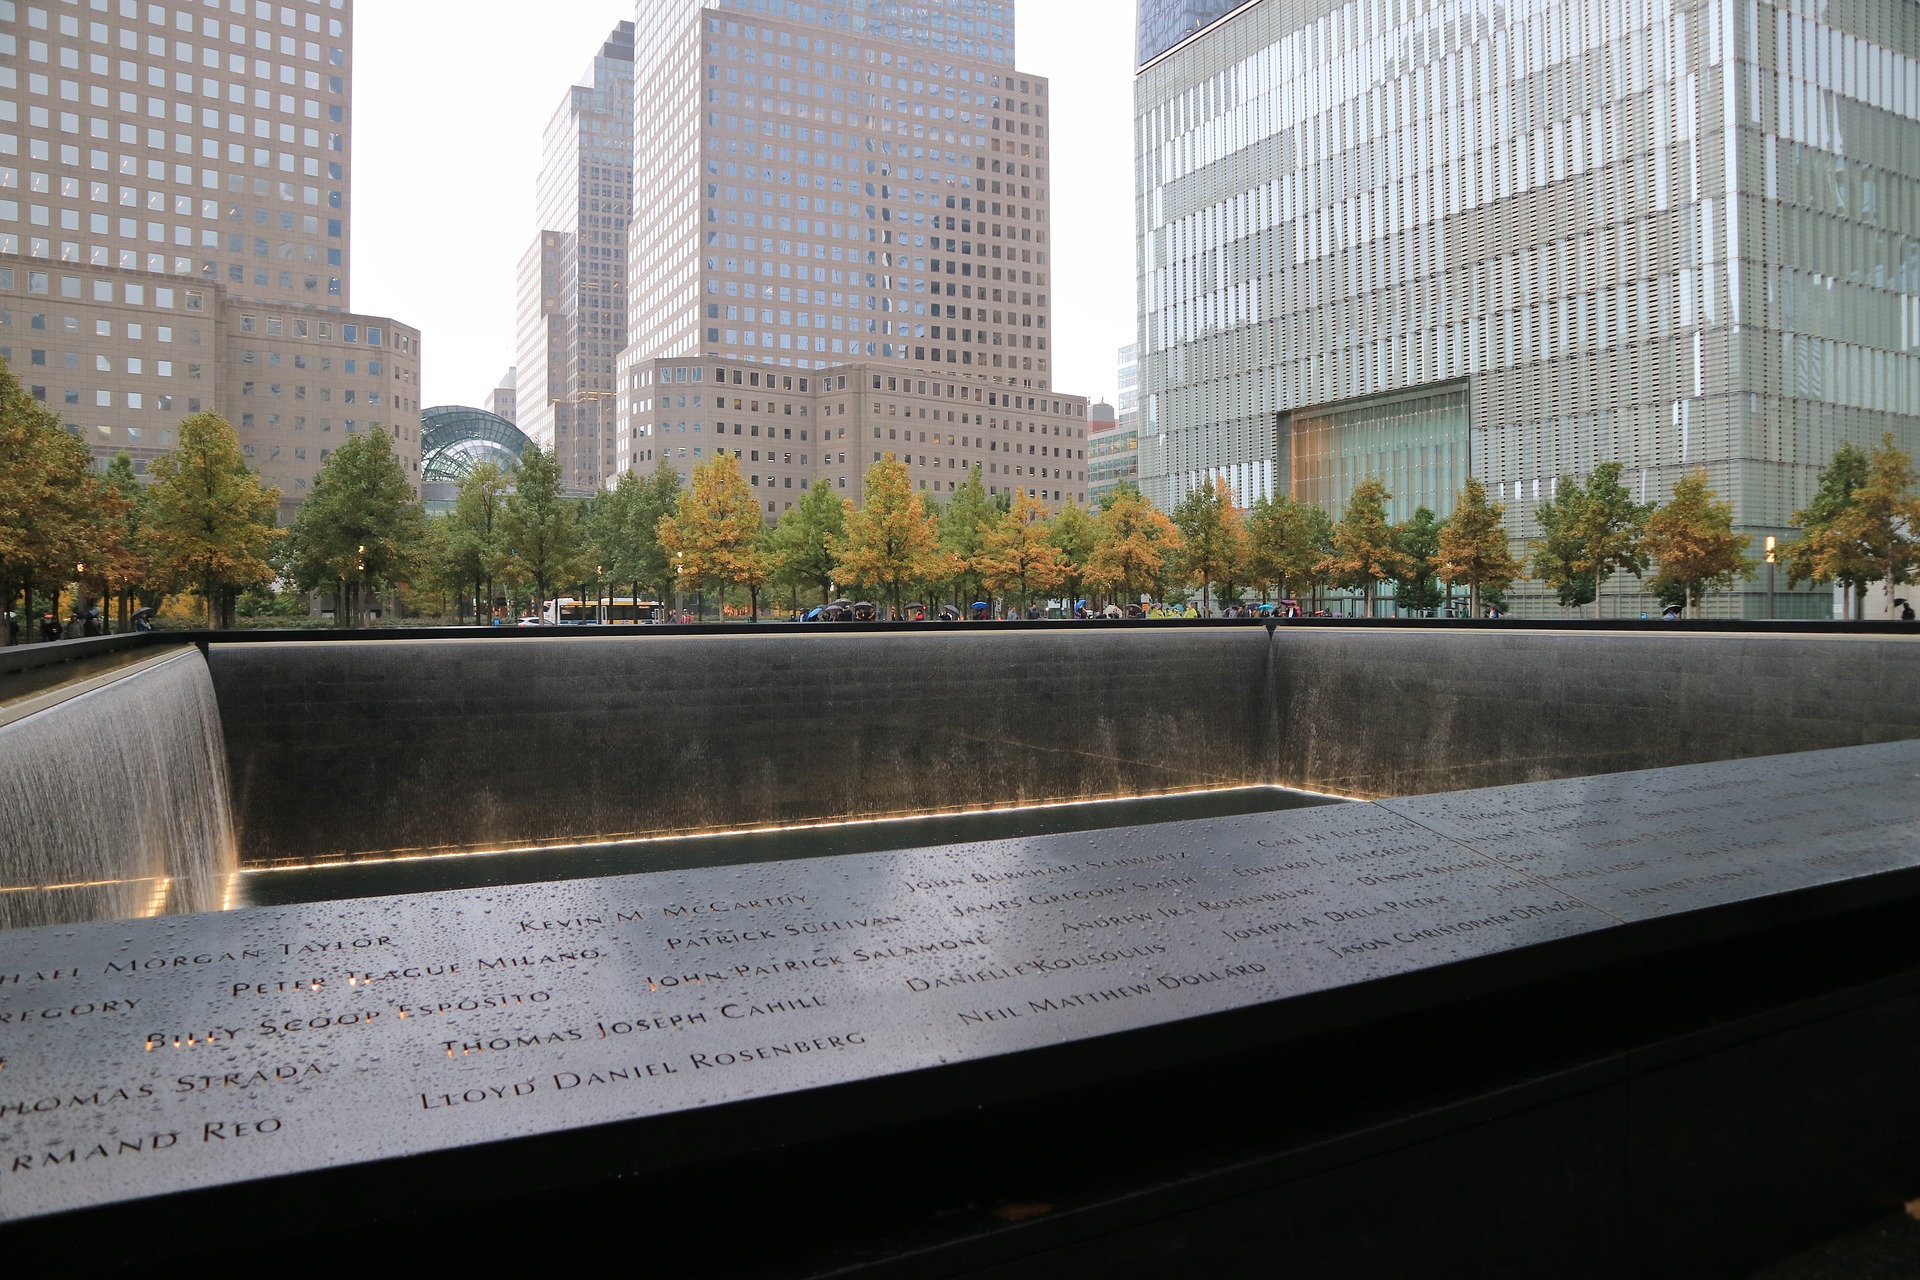 September 11th memorial in New York at ground zero